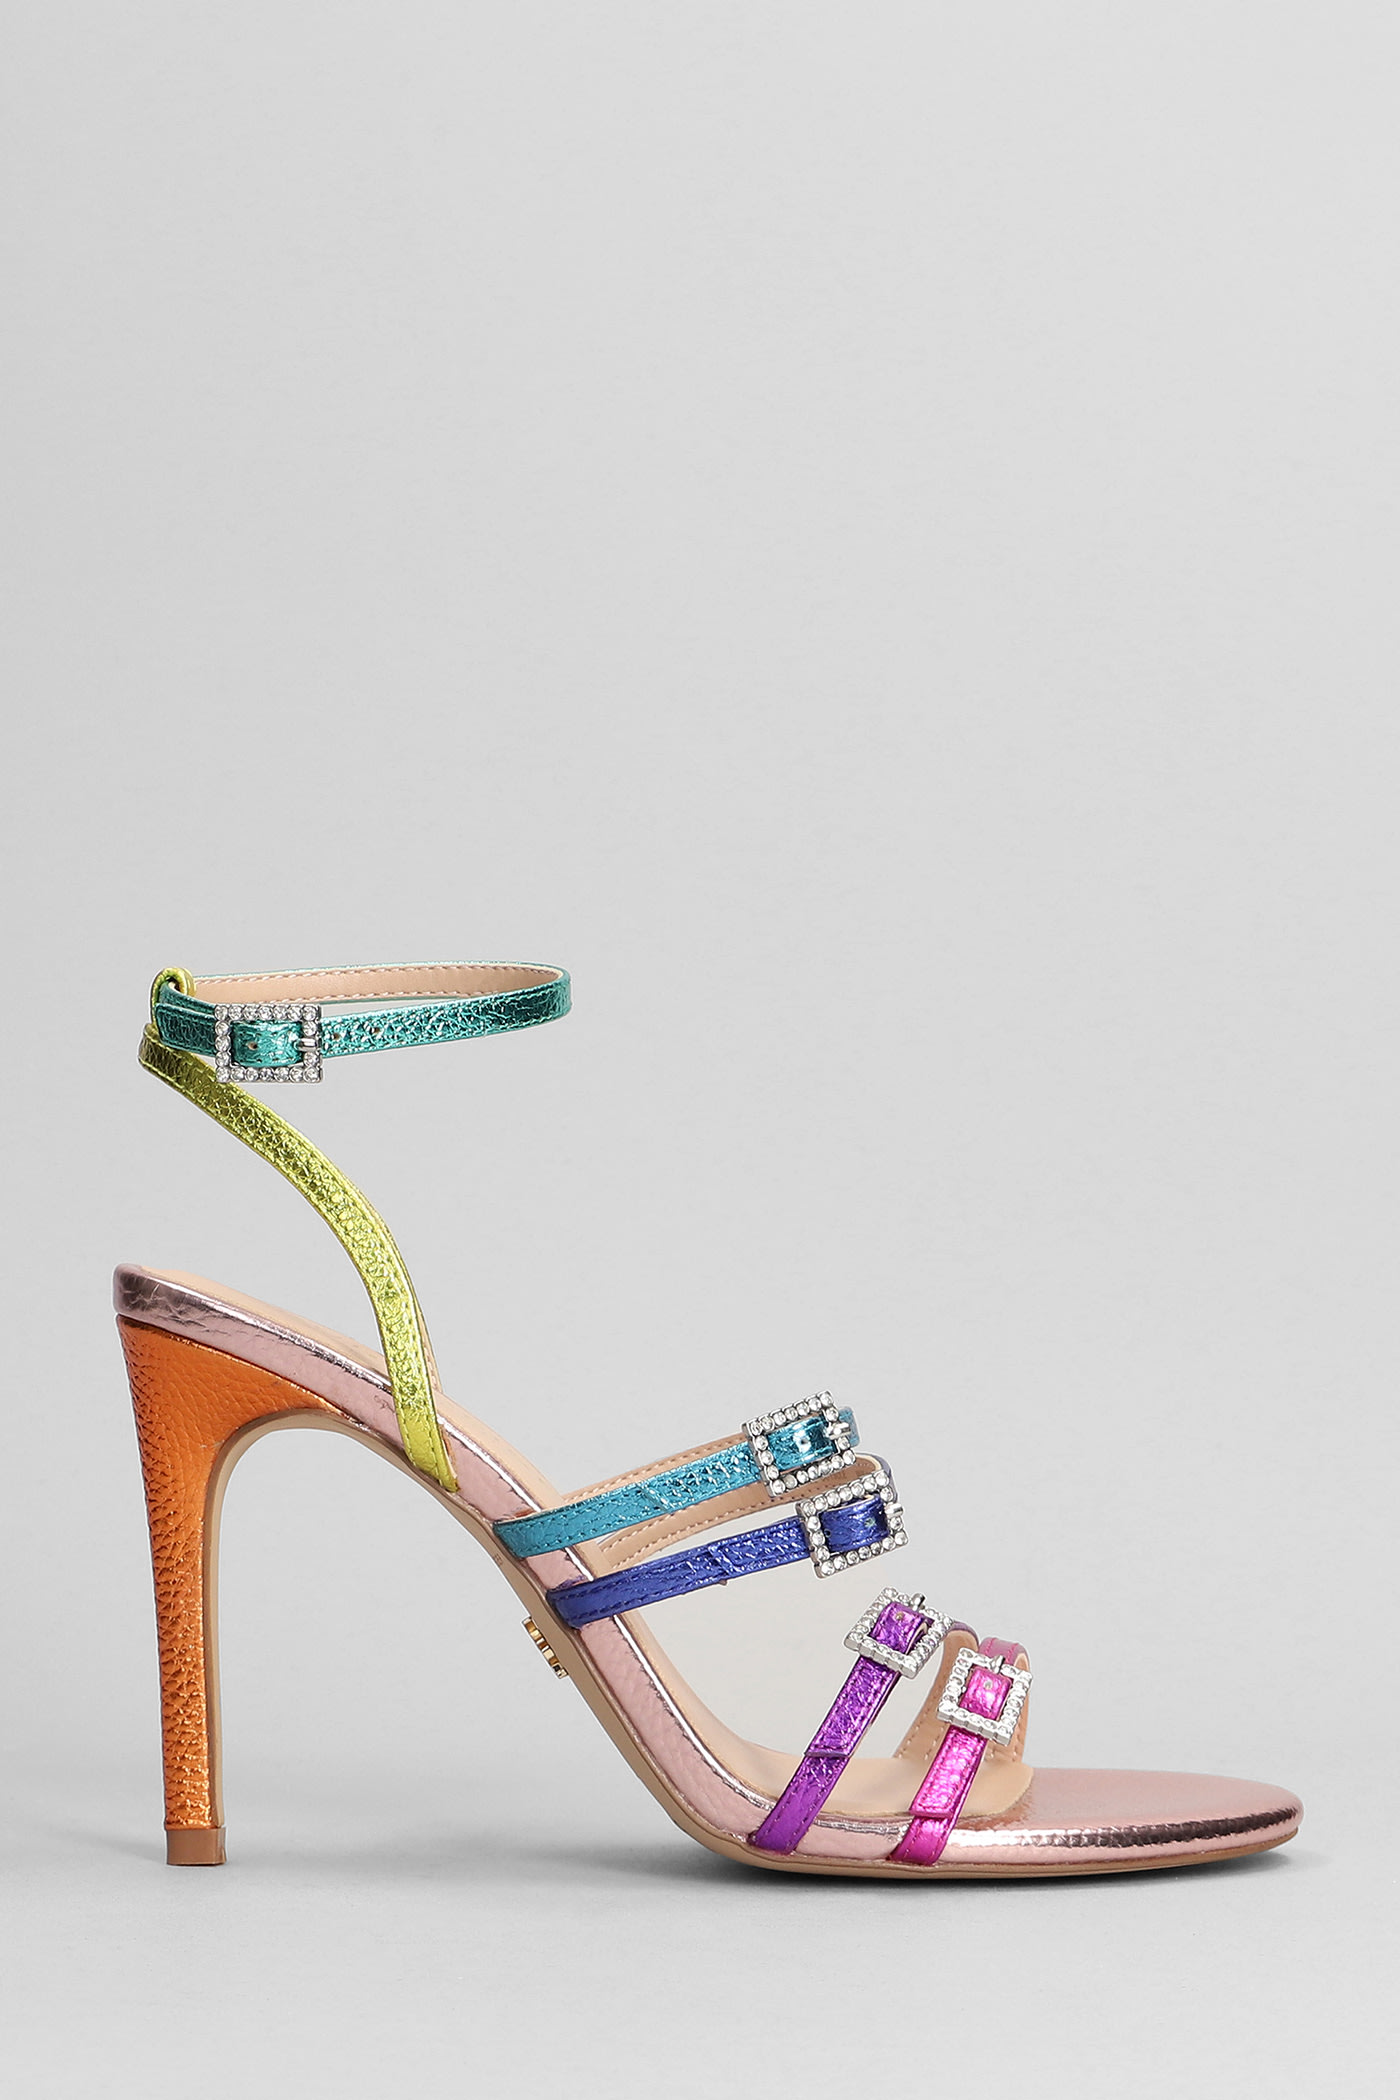 Kurt Geiger Pierra Sandals In Multicolor Leather